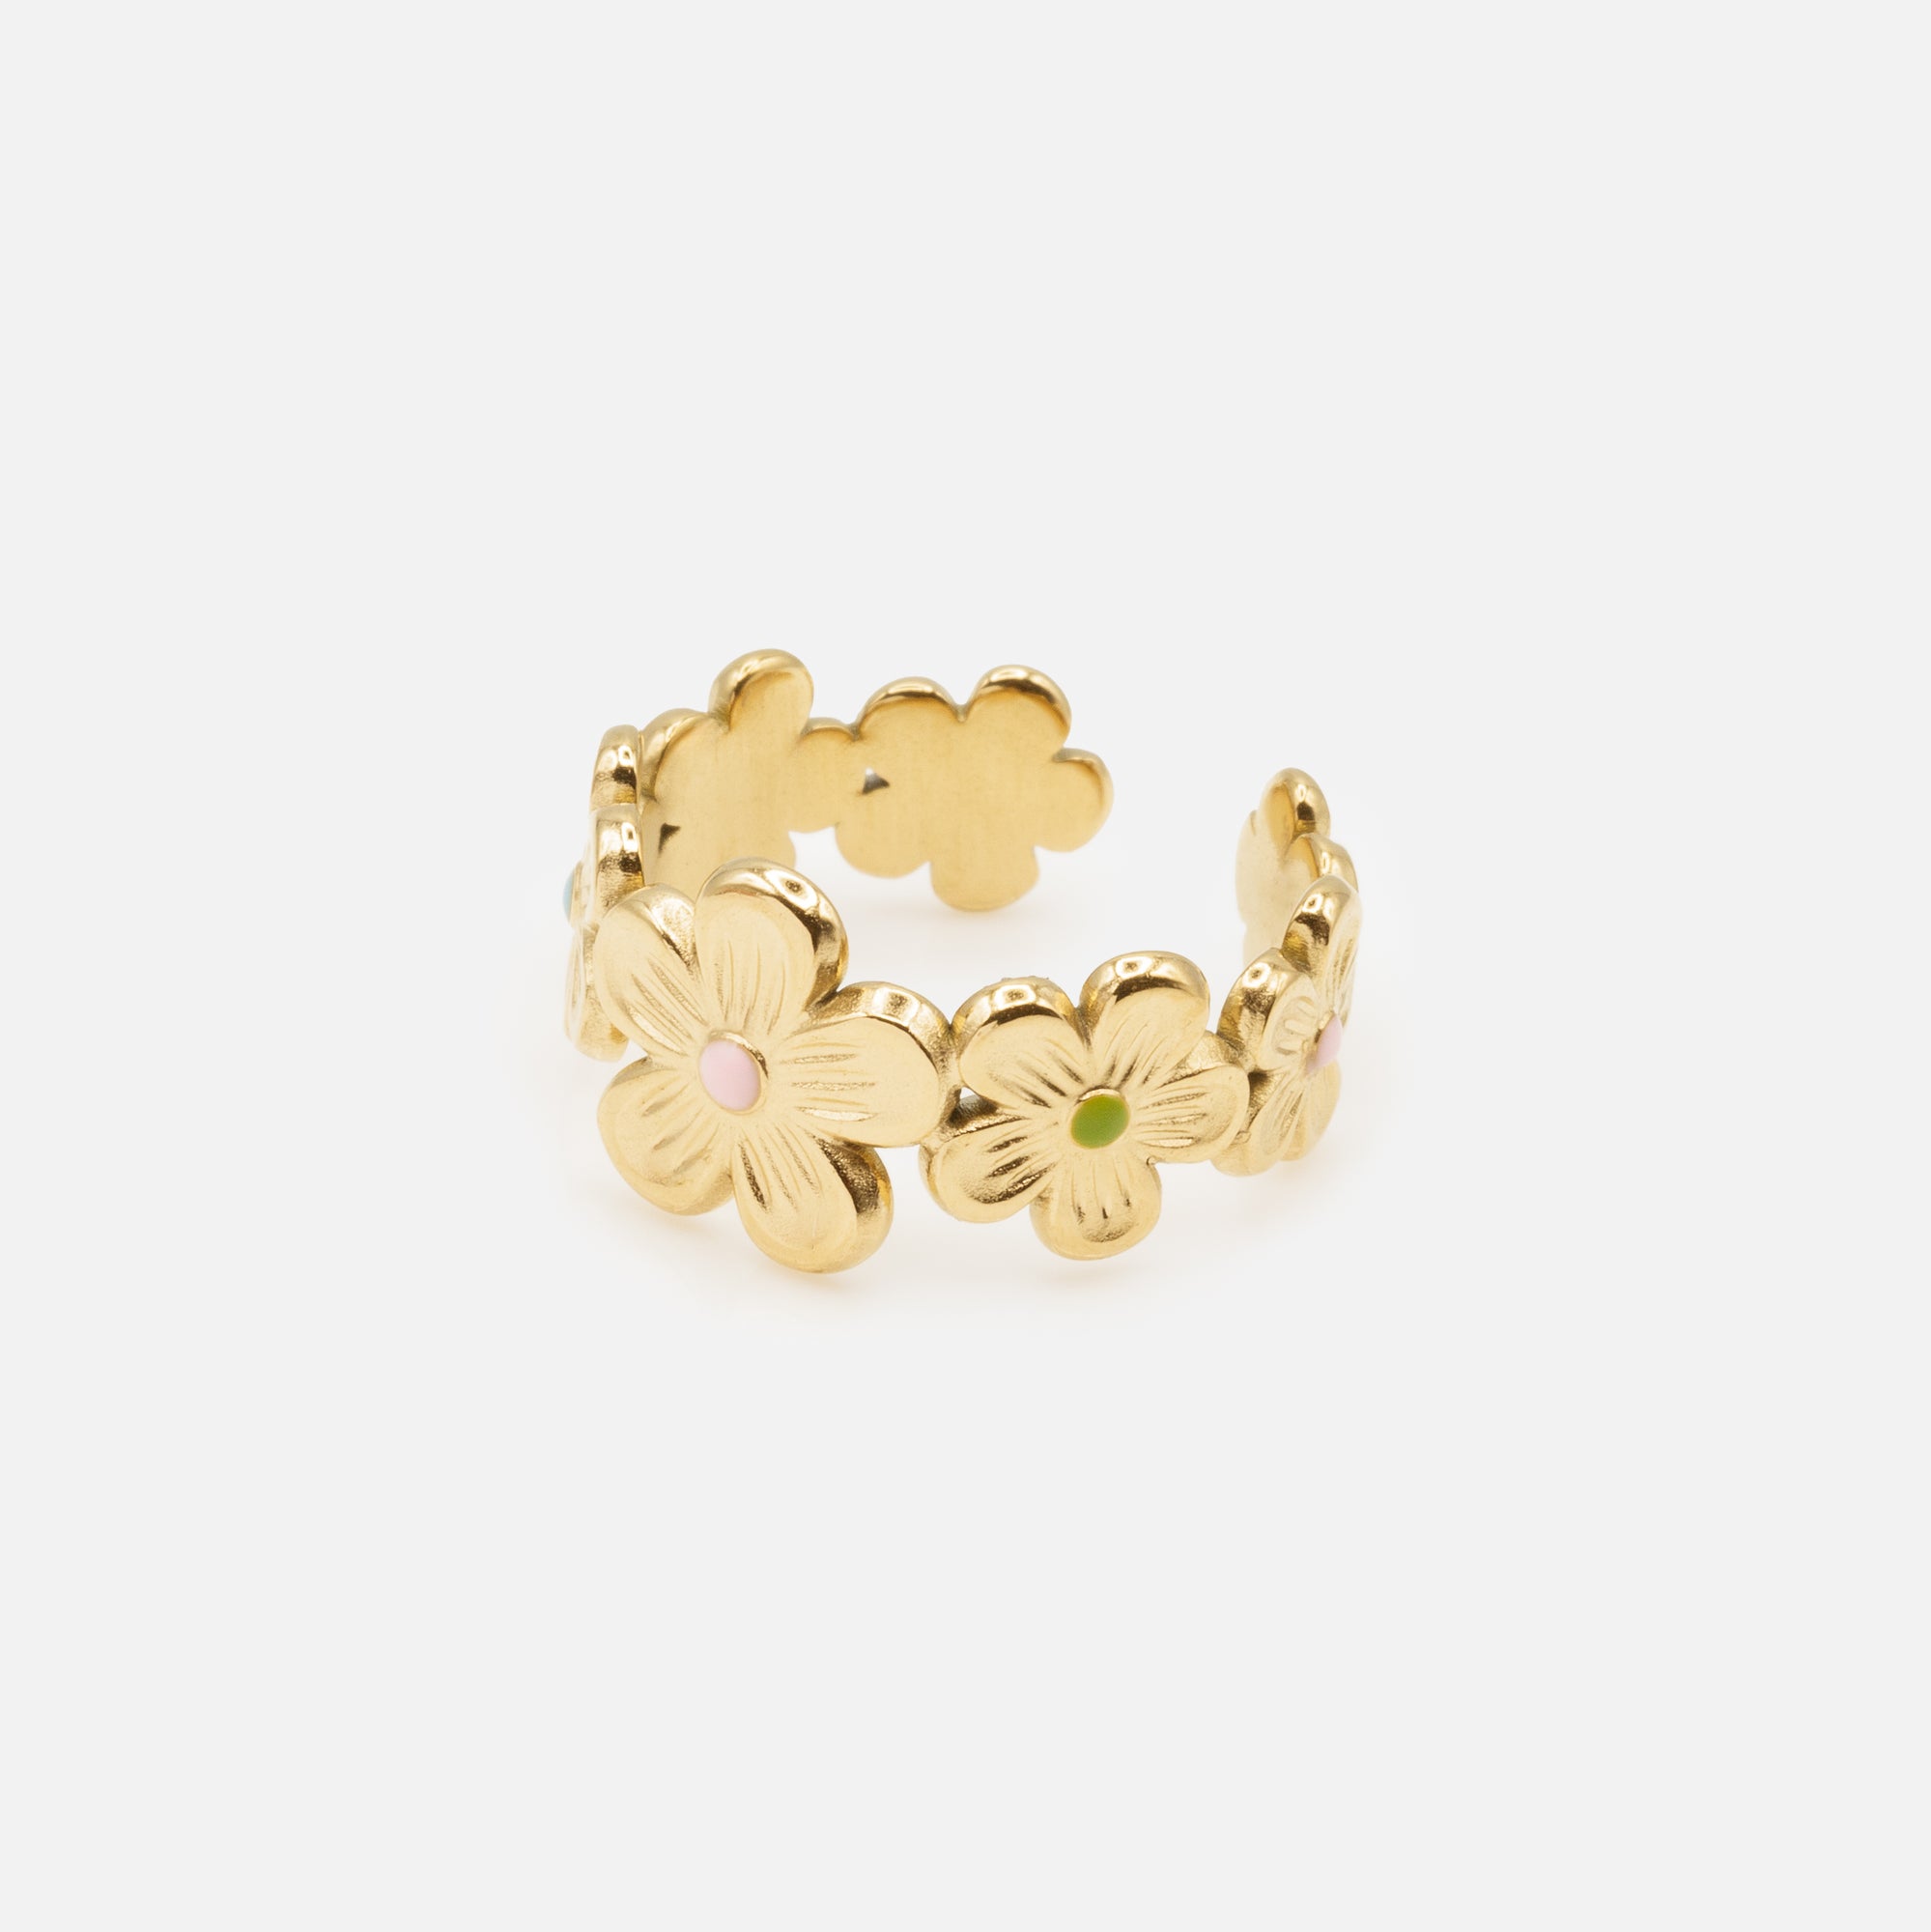 Golden flower crown open ring in stainless steel